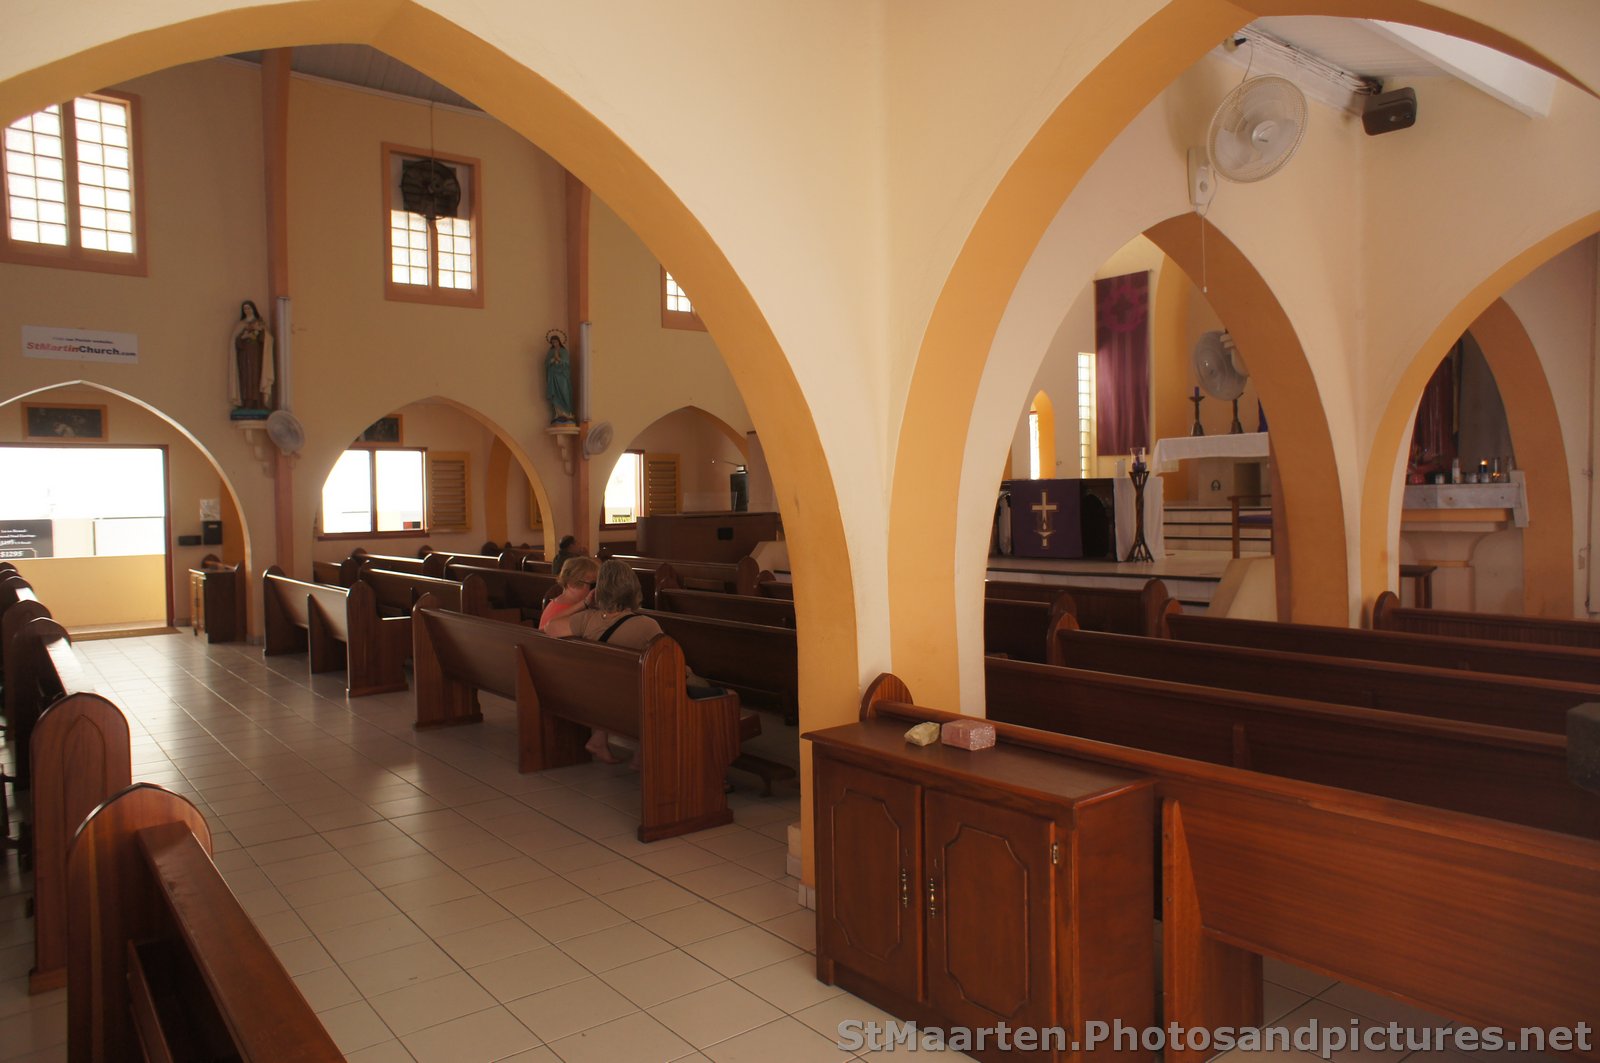 Inside St Martin of Tours Roman Catholic Church Philipsburg St Maarten.jpg
